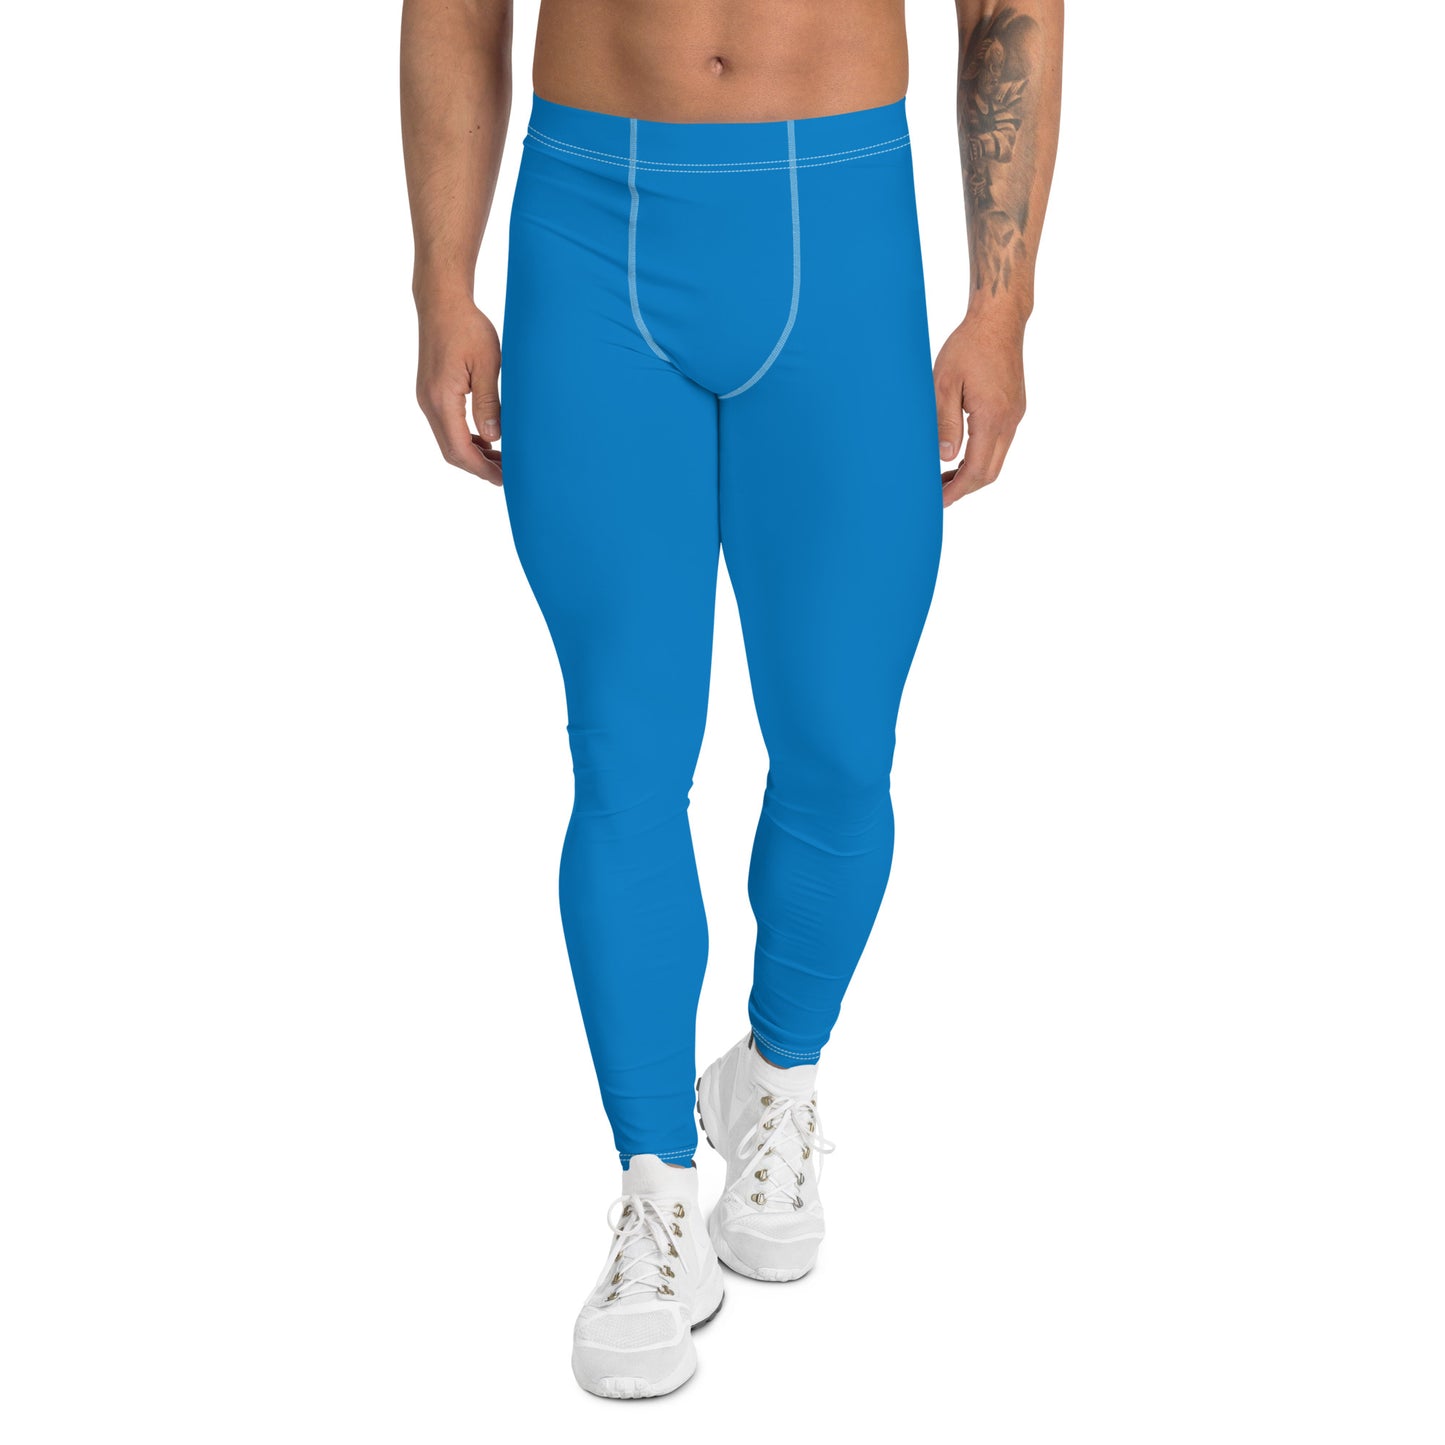 Humble Sportswear, men's color match active compression leggings, blue